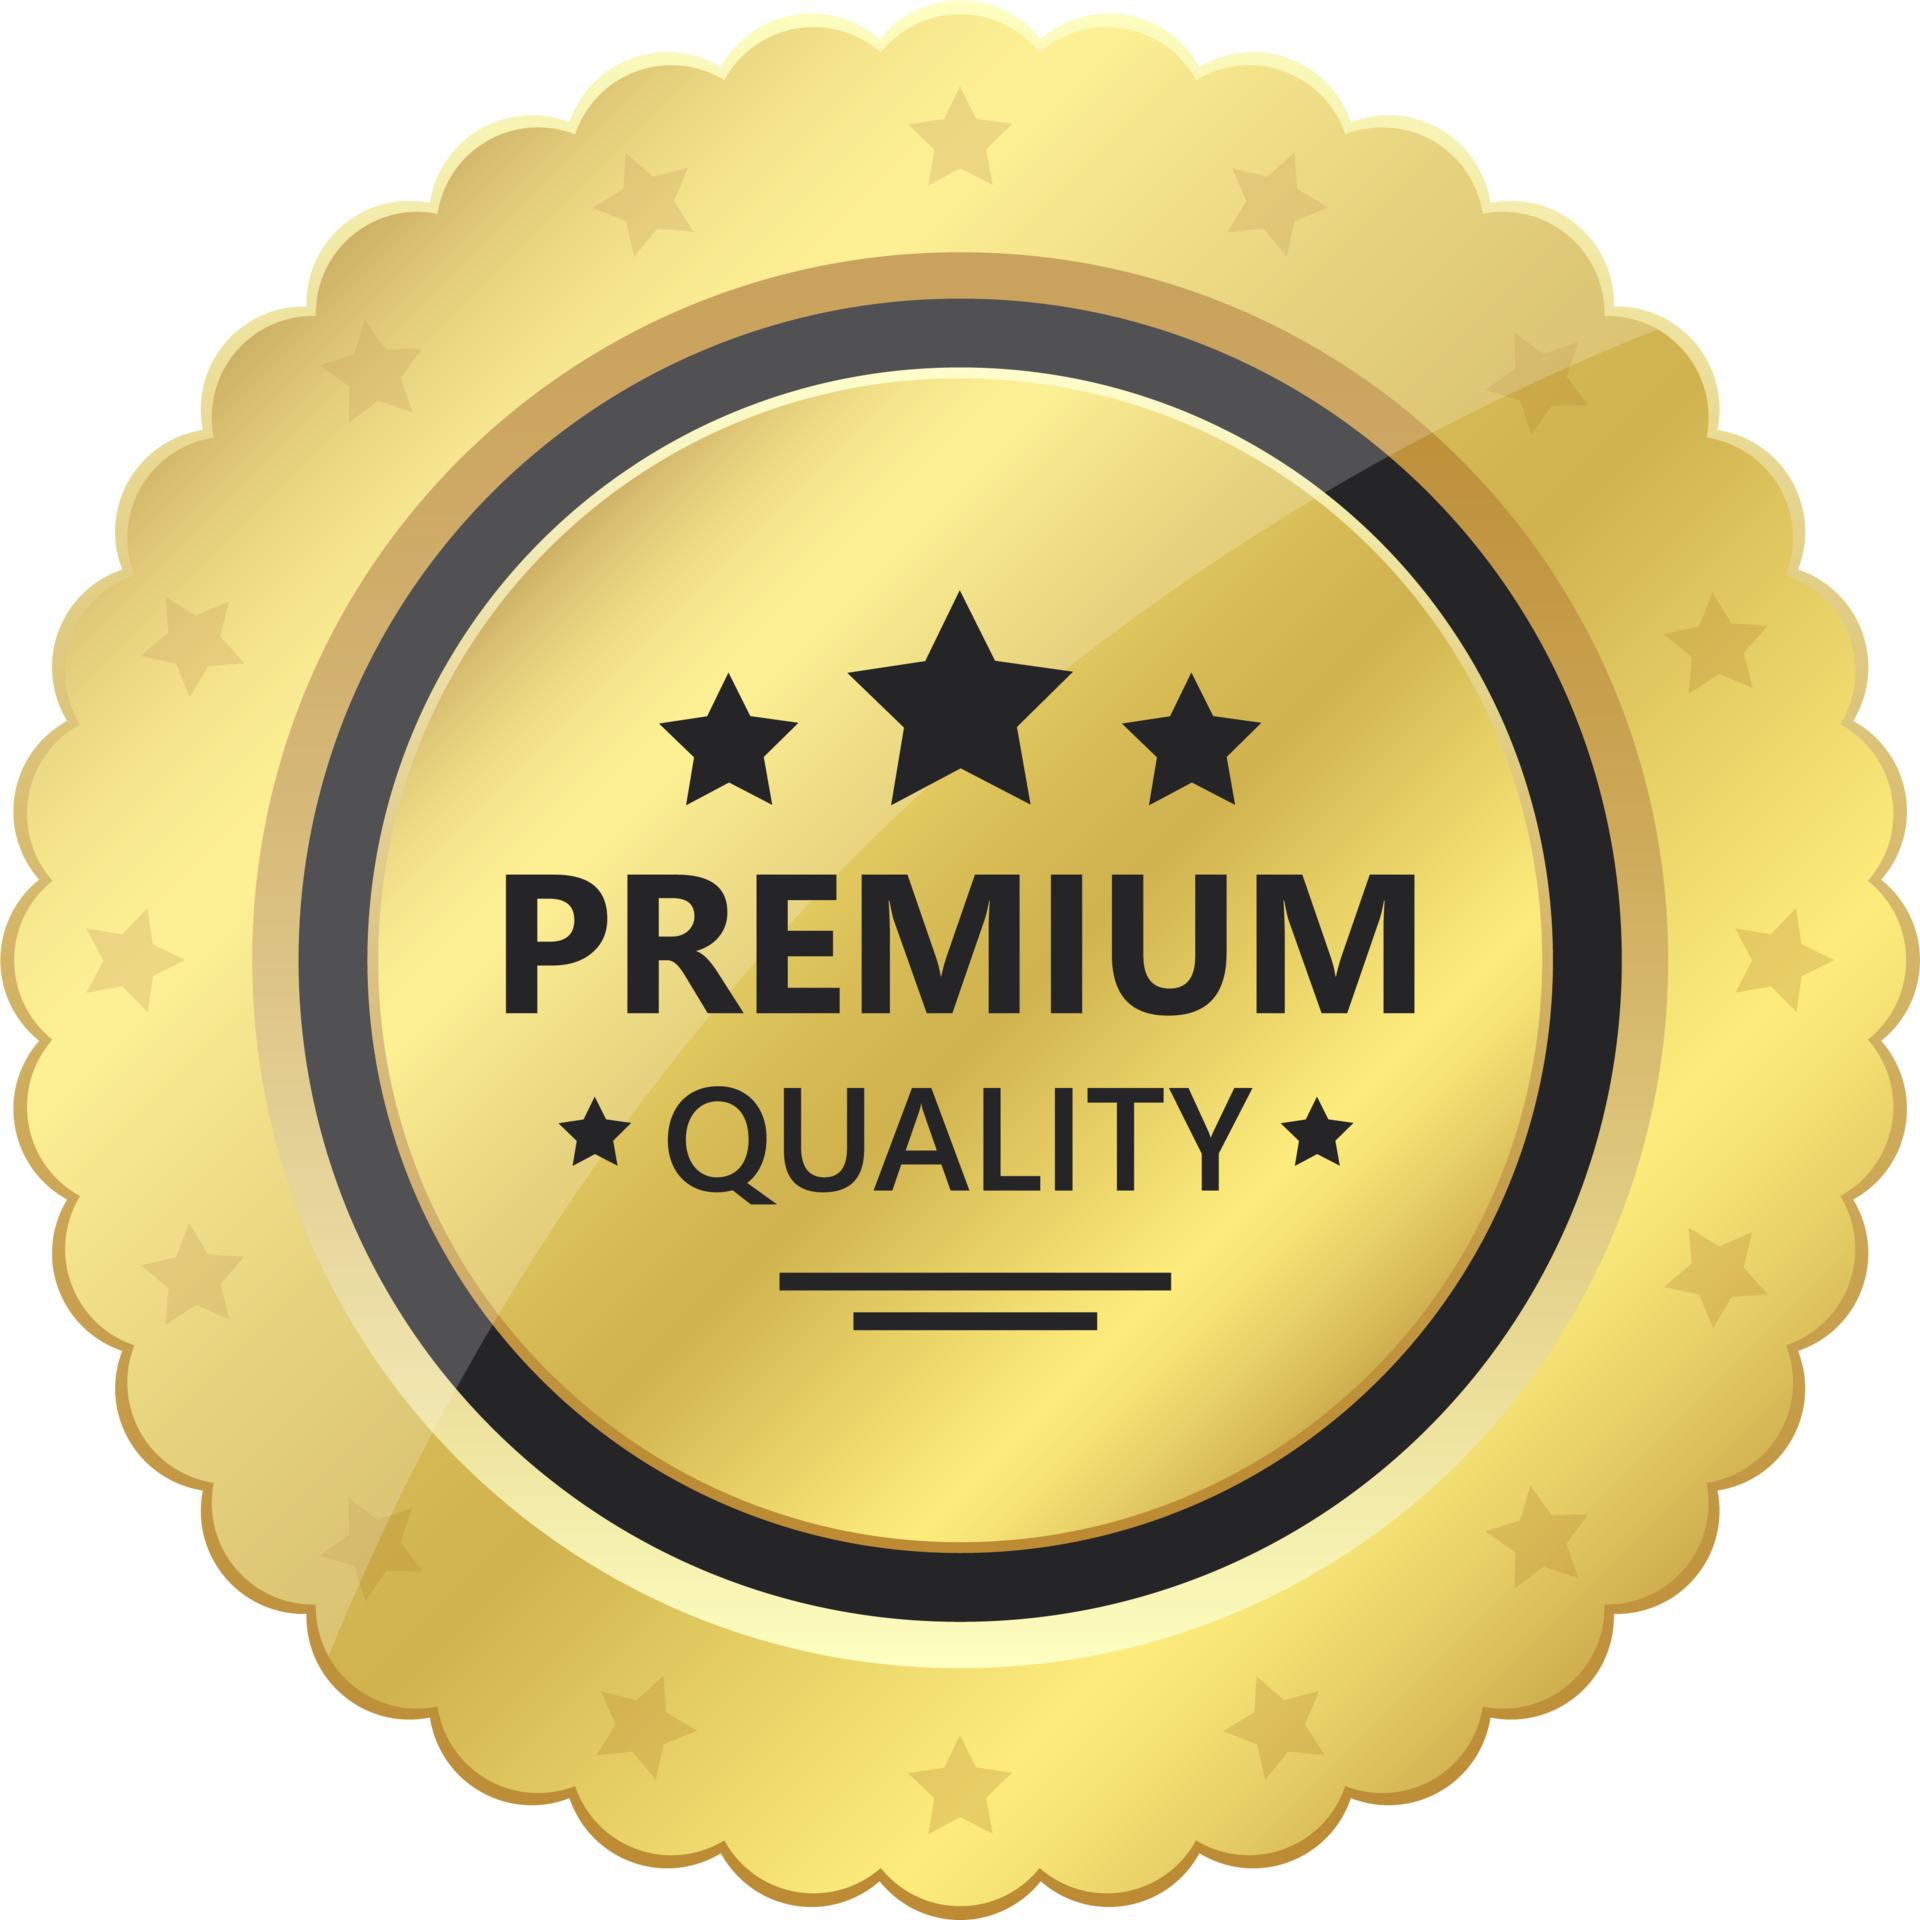 Premium quality golden emblem clipart design illustration 9342685 PNG